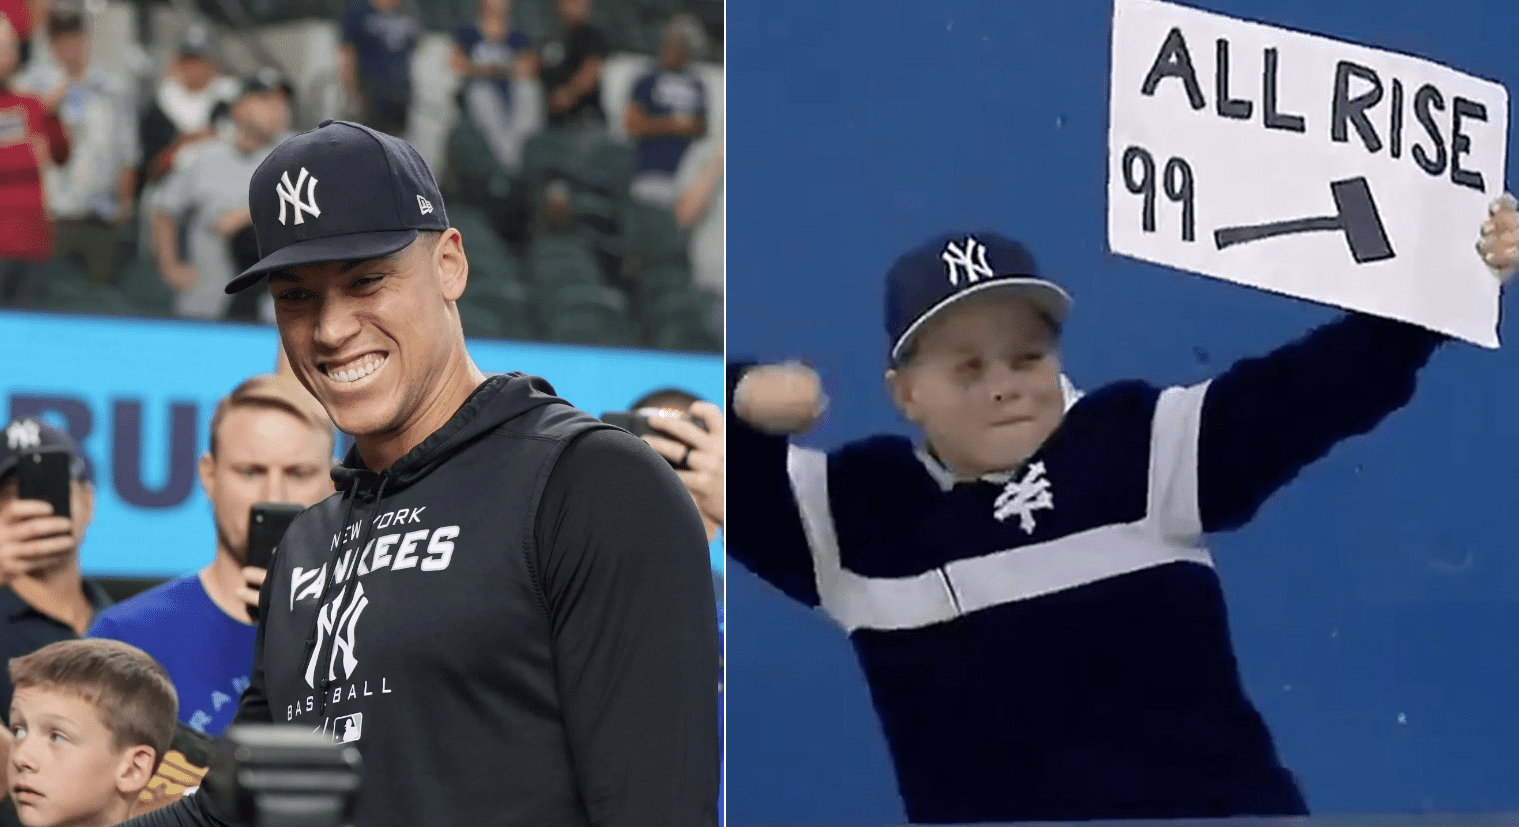 Yankees' Aaron Judge, MLBPA win dispute over 'All Rise' trademark